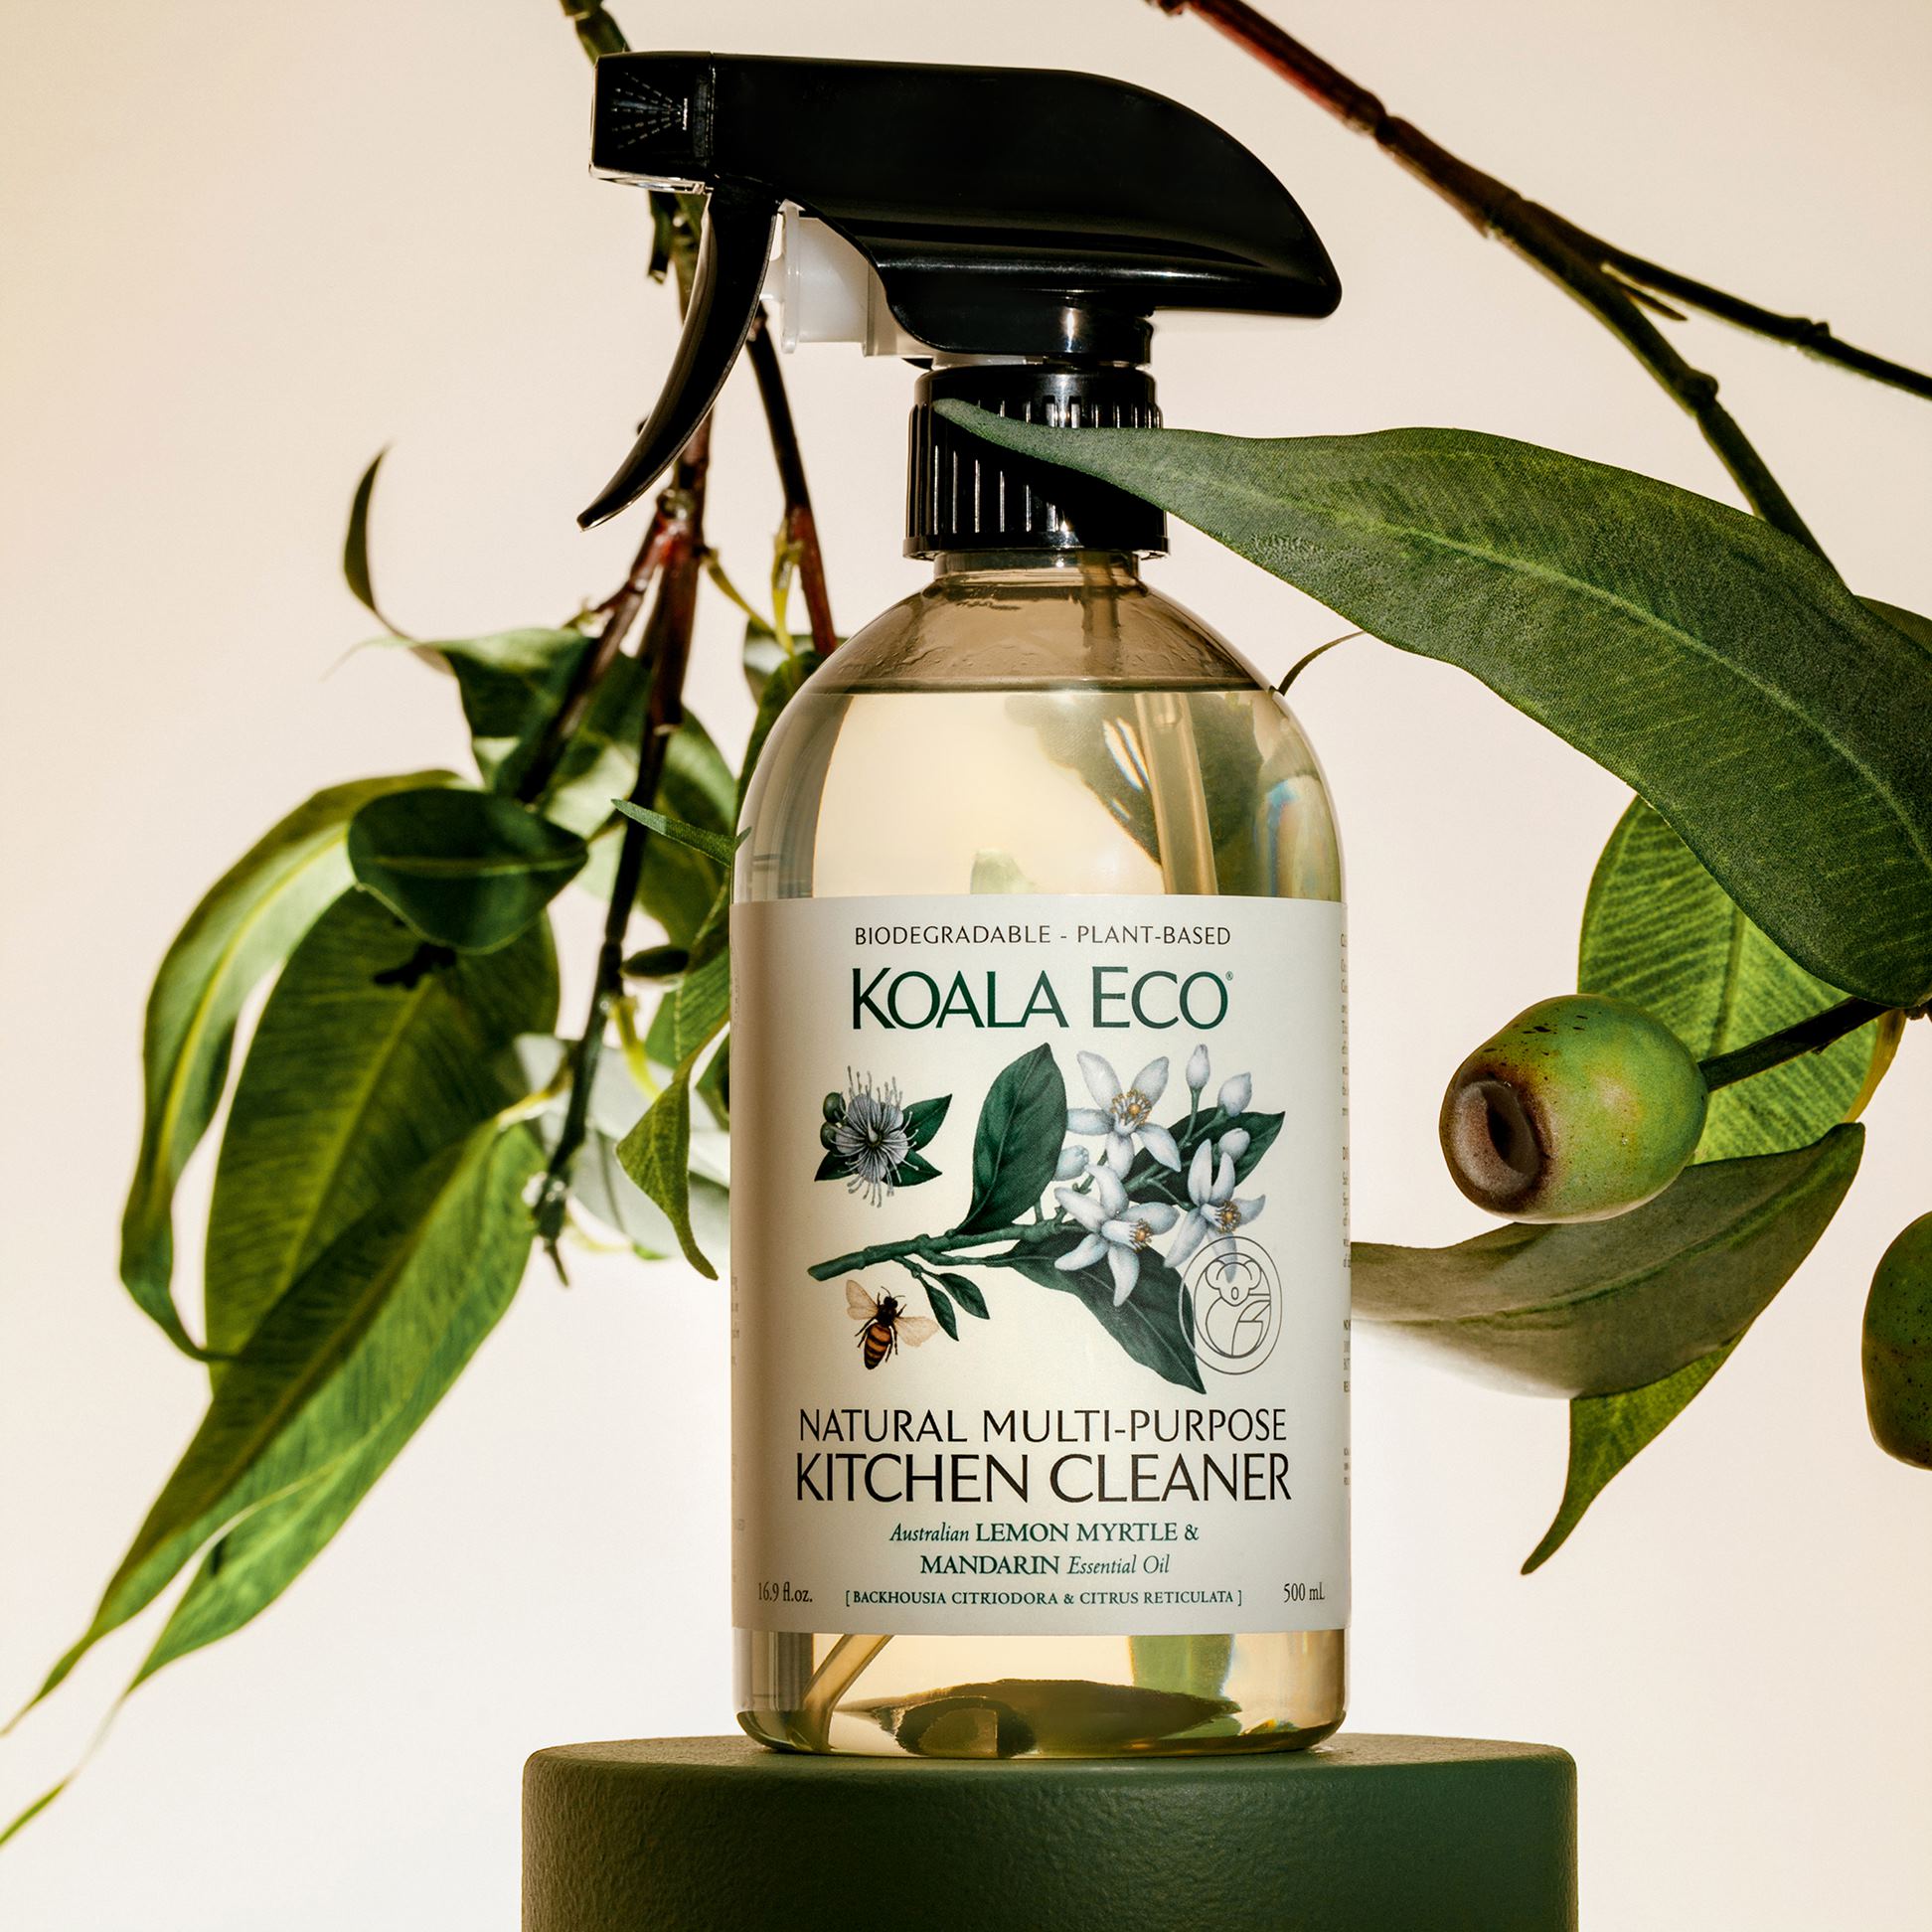 Koala Eco - Natural Dish Soap - Lemon, Myrtle & Mandarin, 16.9fl oz 